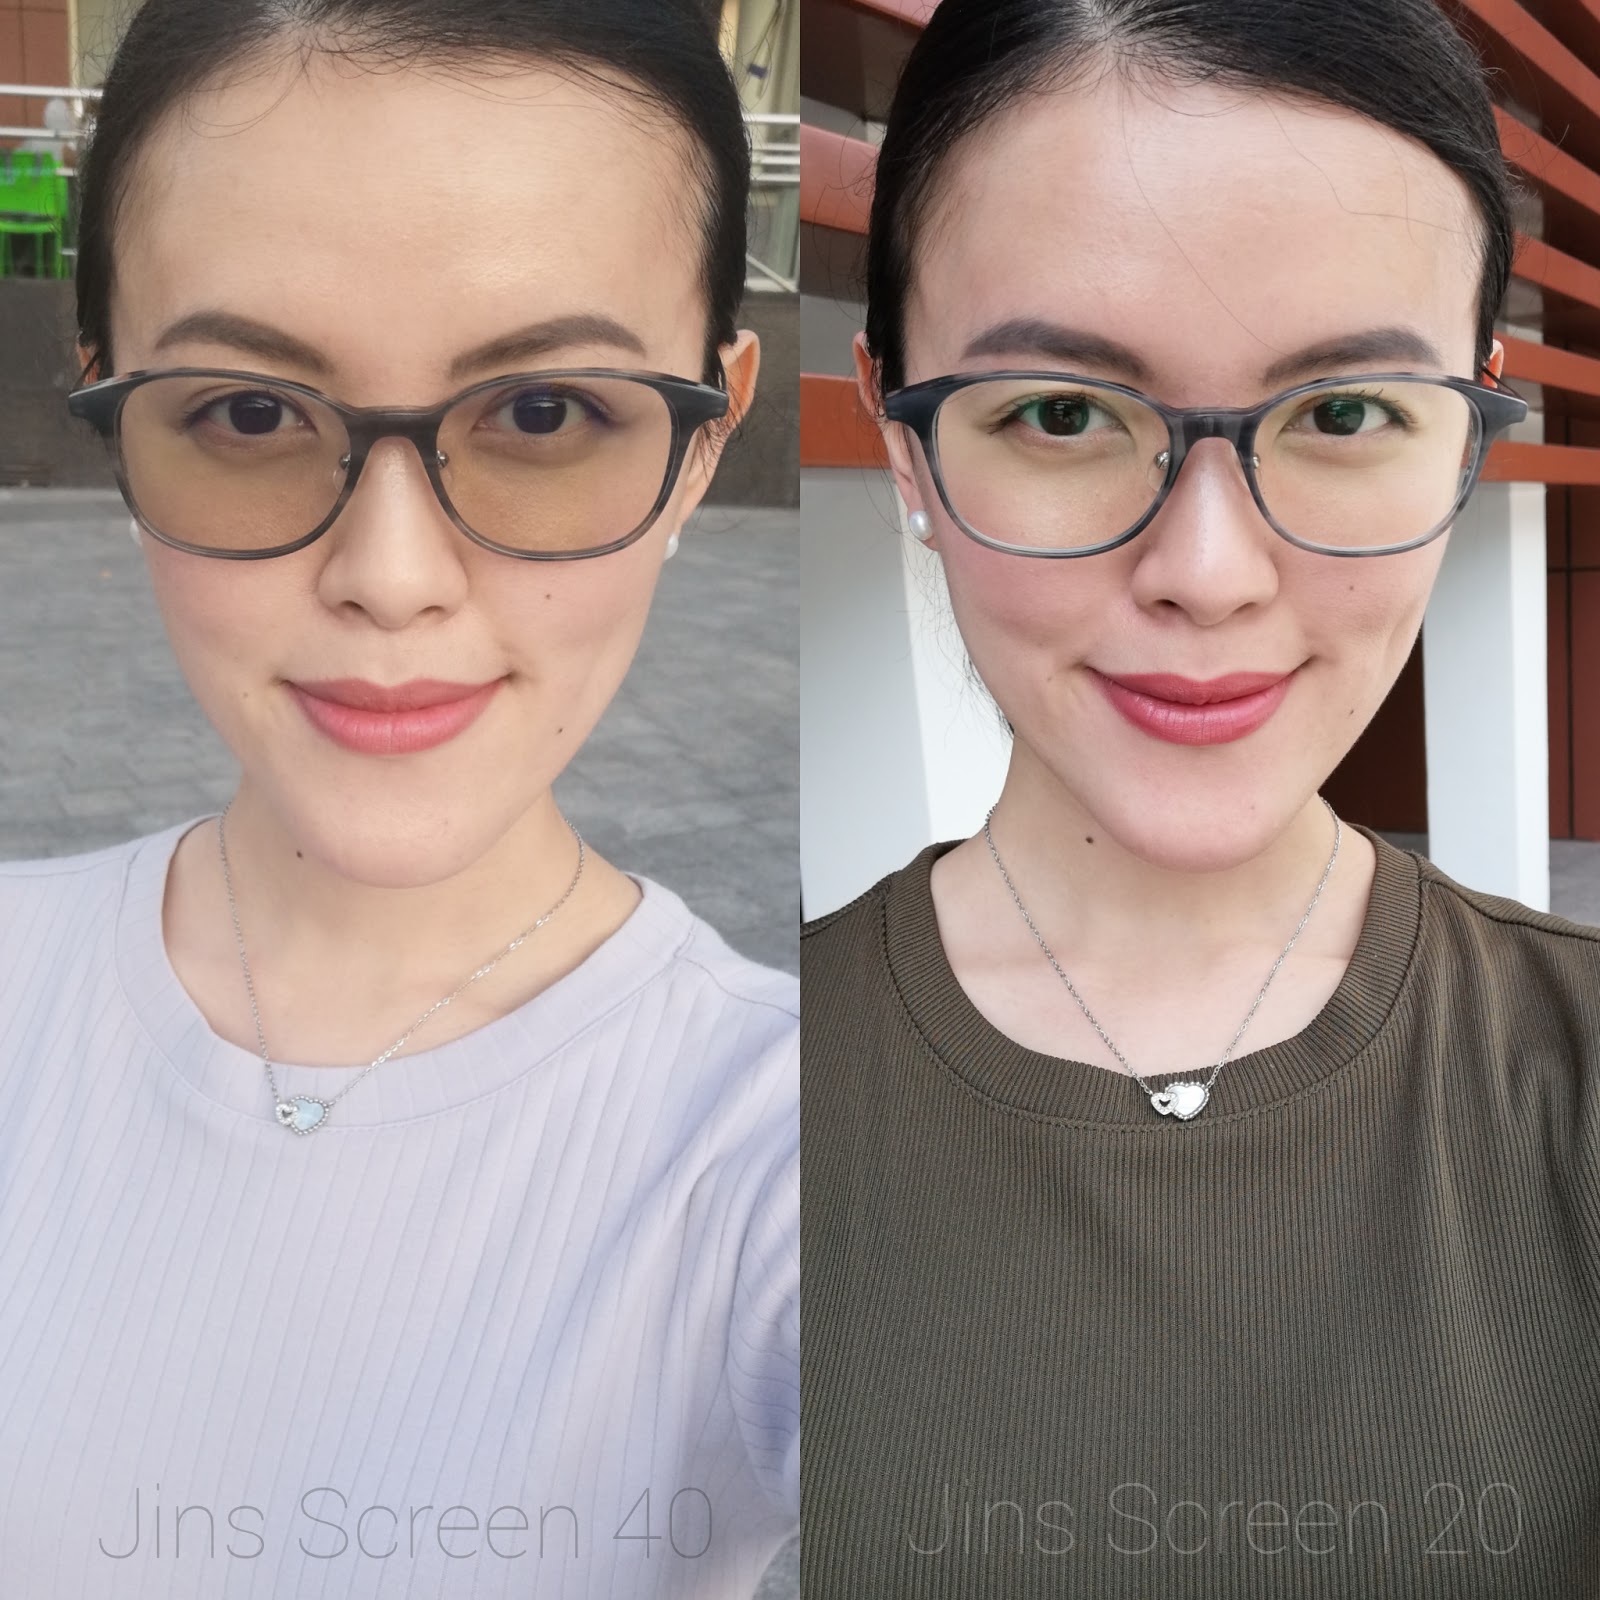 NEW Jins Pokémon Glasses with free Blue Block lens